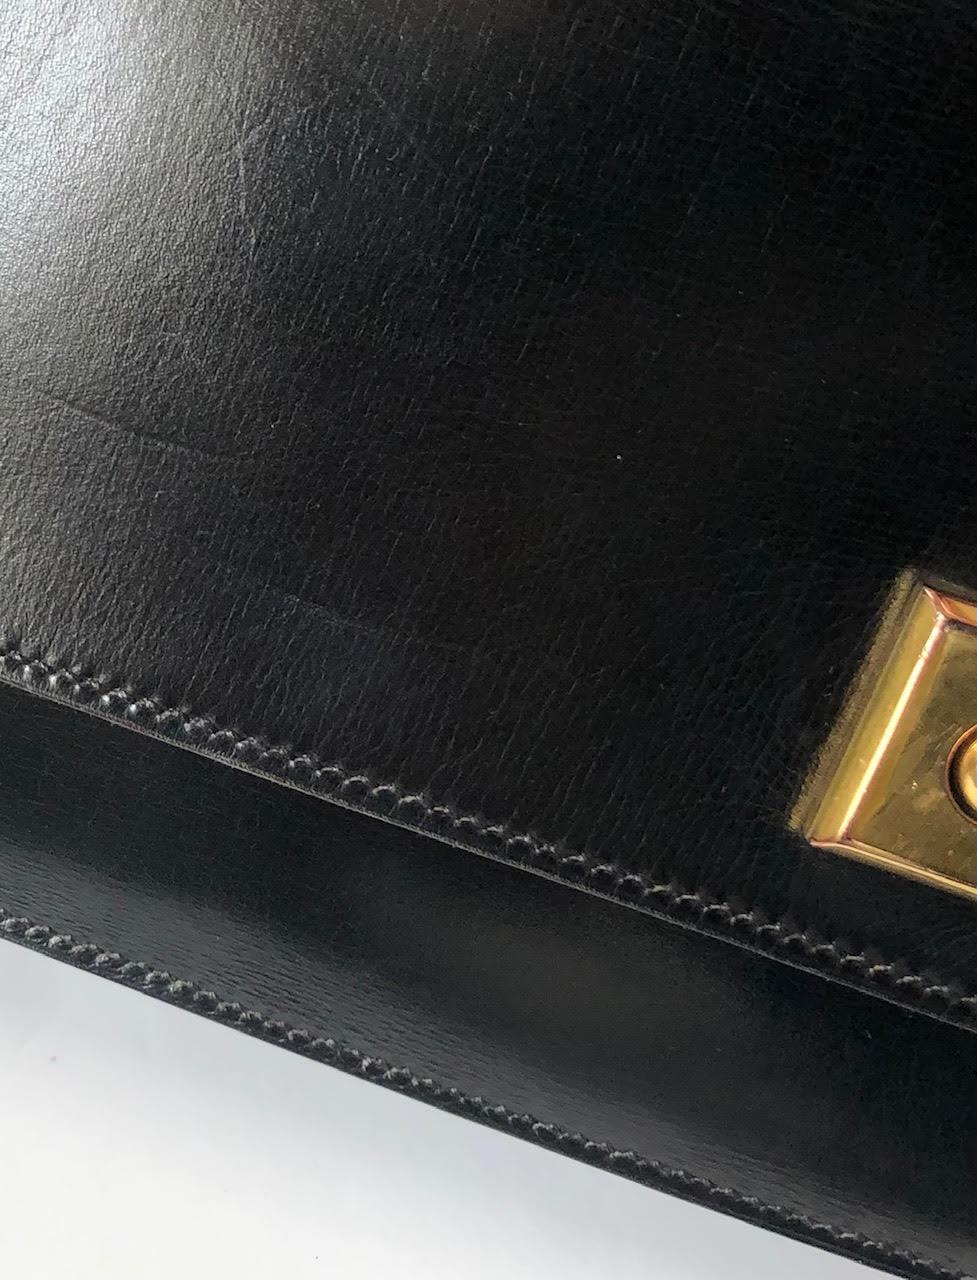 HERMÈS Piano Handbag Black Box Leather Vintage Circa 1960s W/Box 9